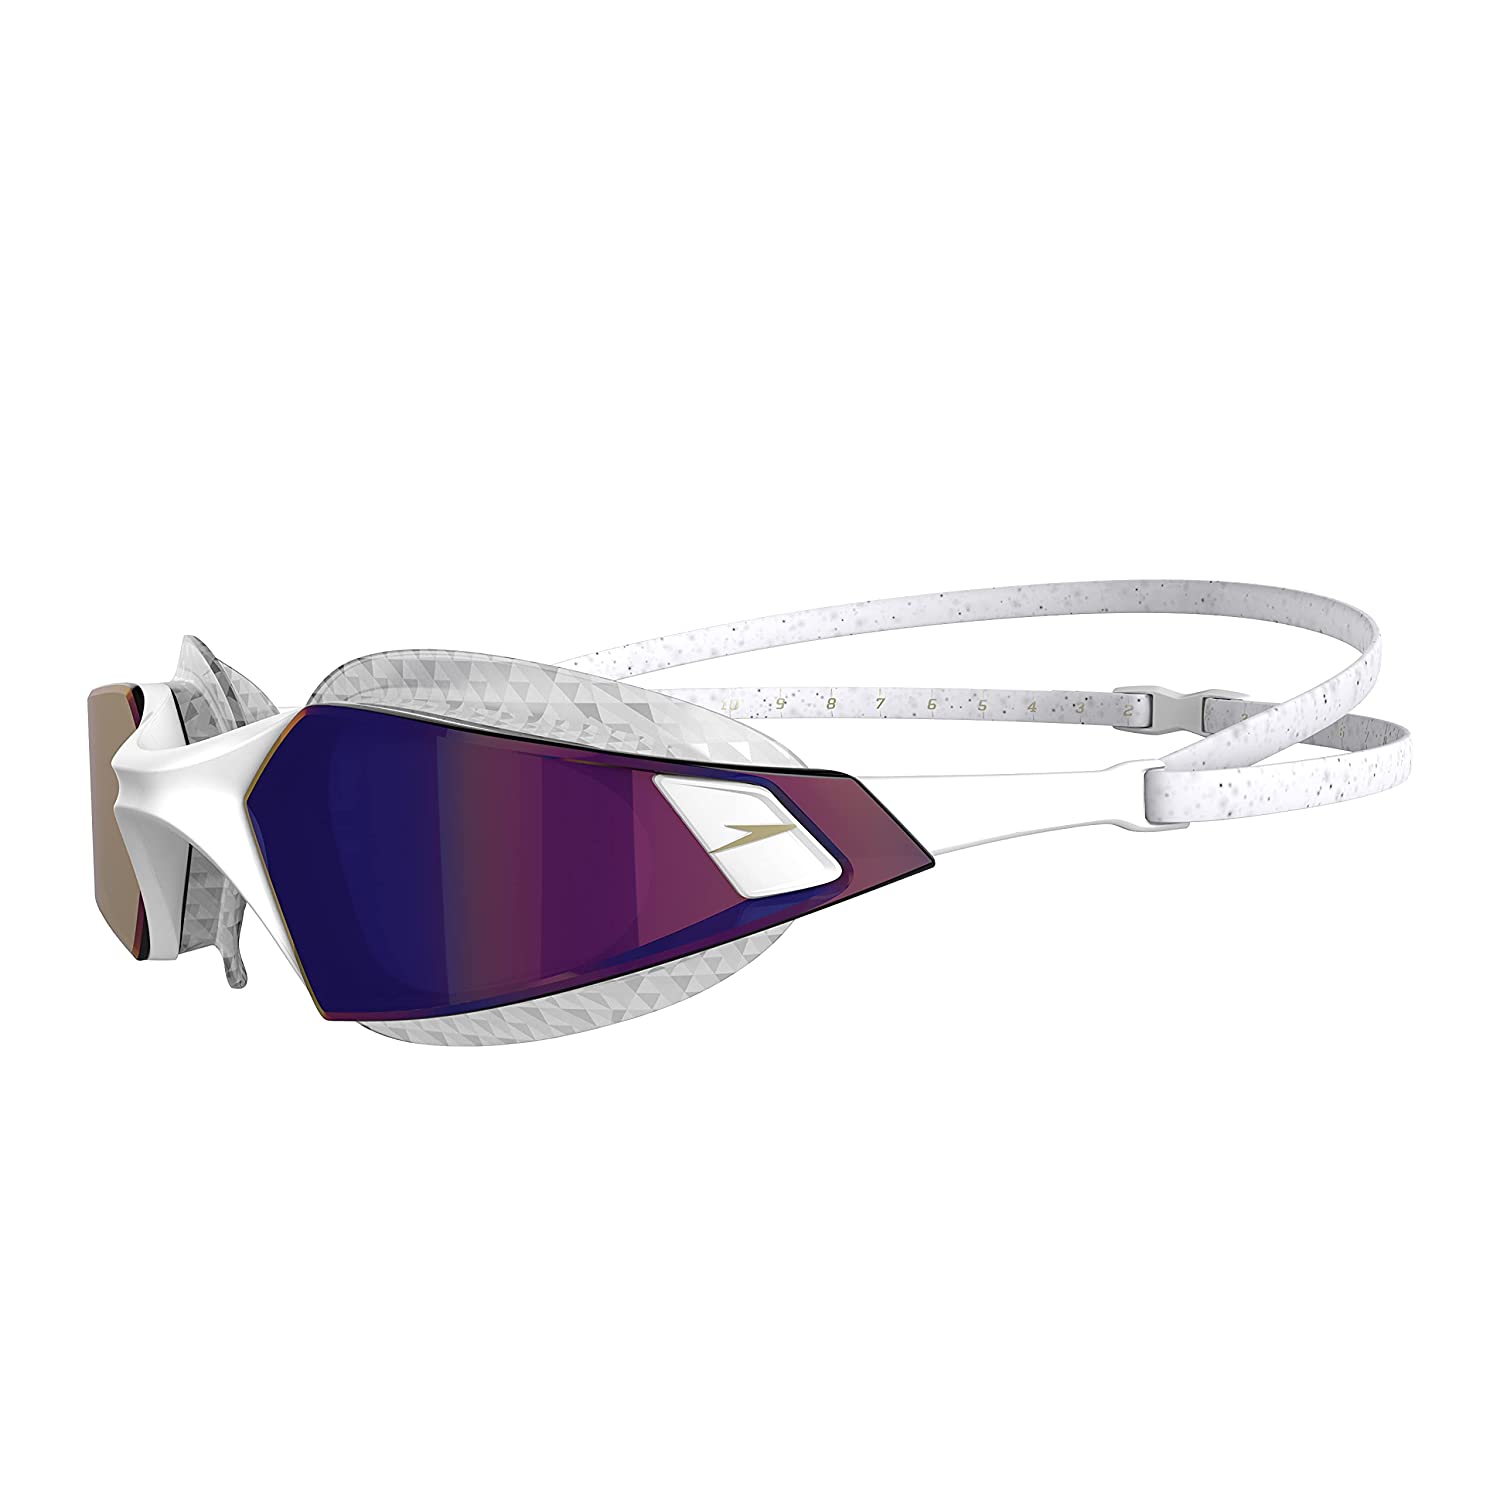 Speedo Aquapulse Pro Mirror For Unisex-Adult (Size: 1Sz,Color: White/Purple) - Best Price online Prokicksports.com